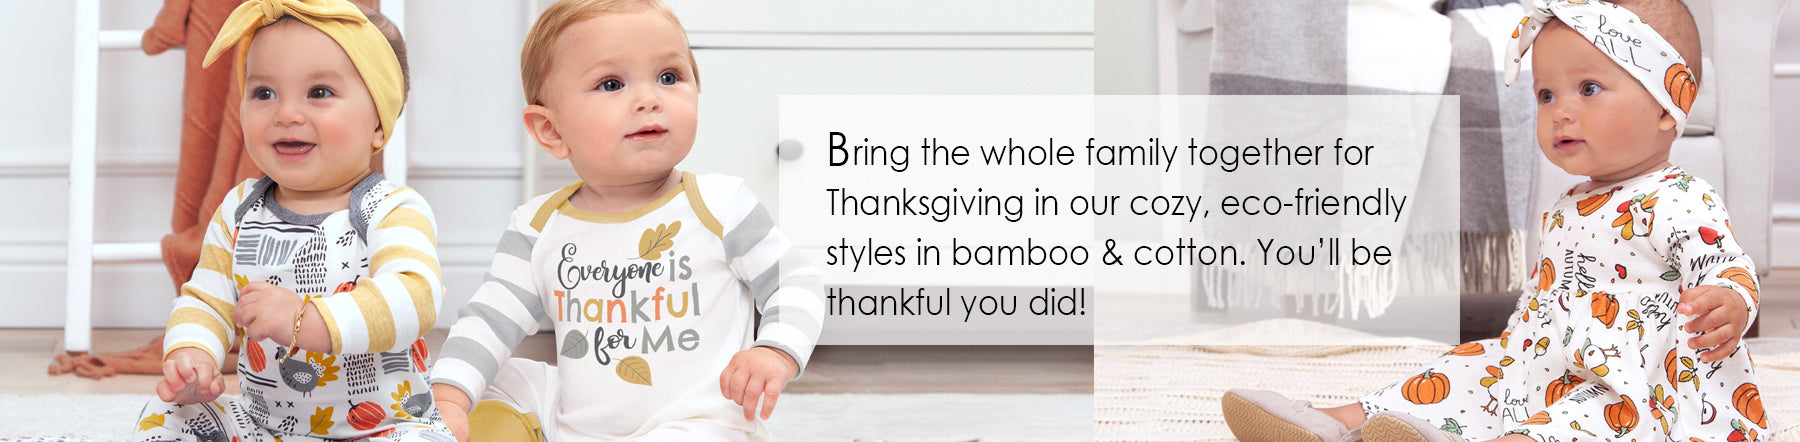 Thanksgiving bamboo clothes